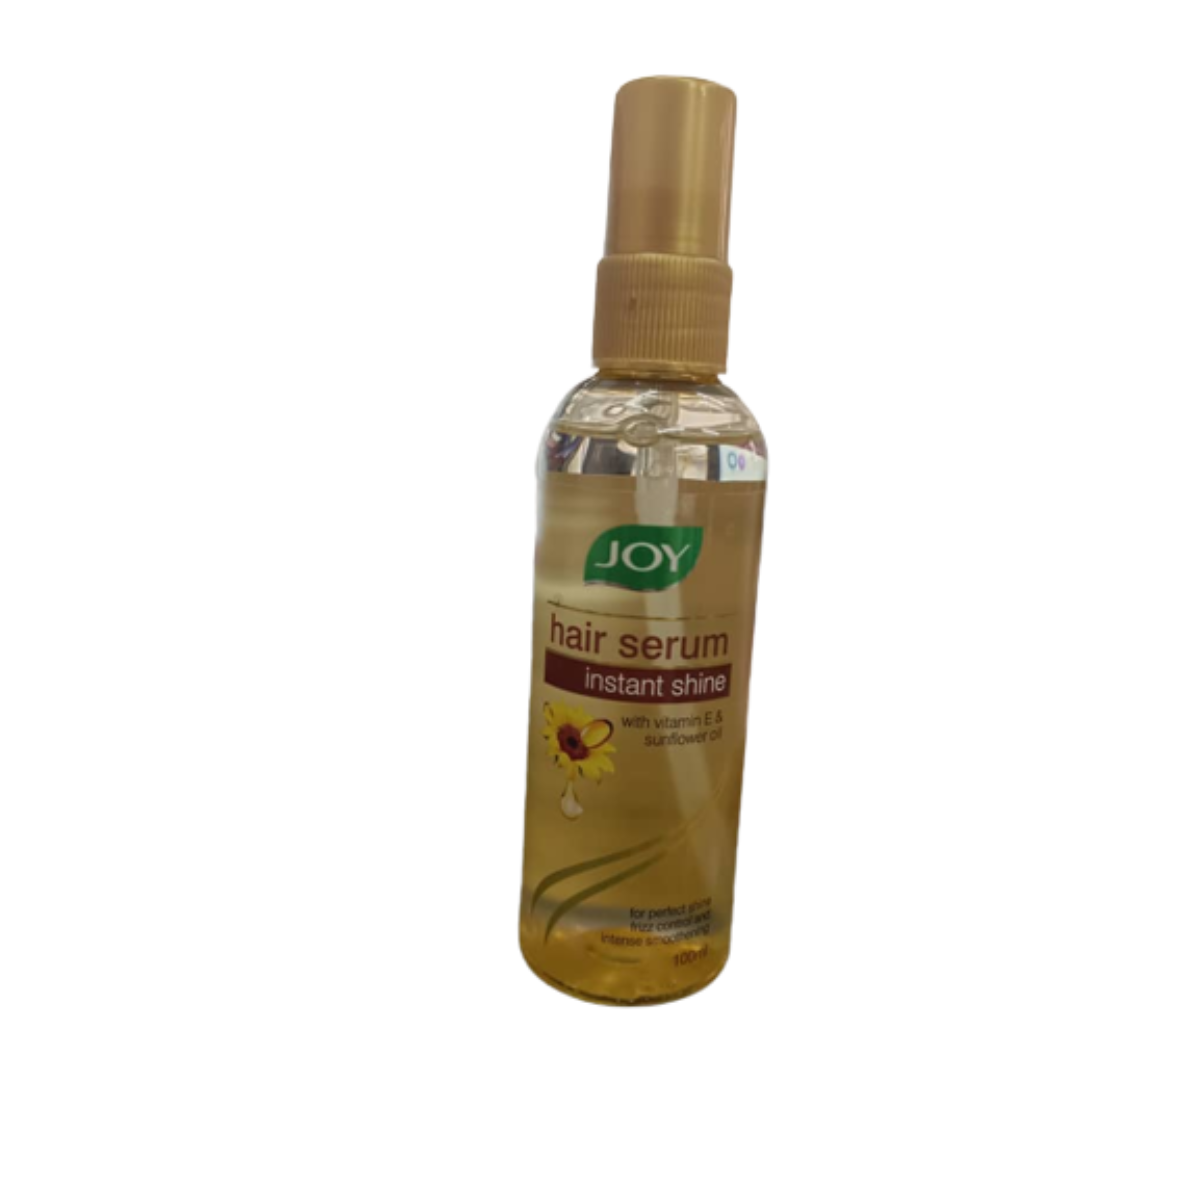 Joy Hair Serum - Instant Shine - With Vitamin E & Sunflower Oil - 100ml